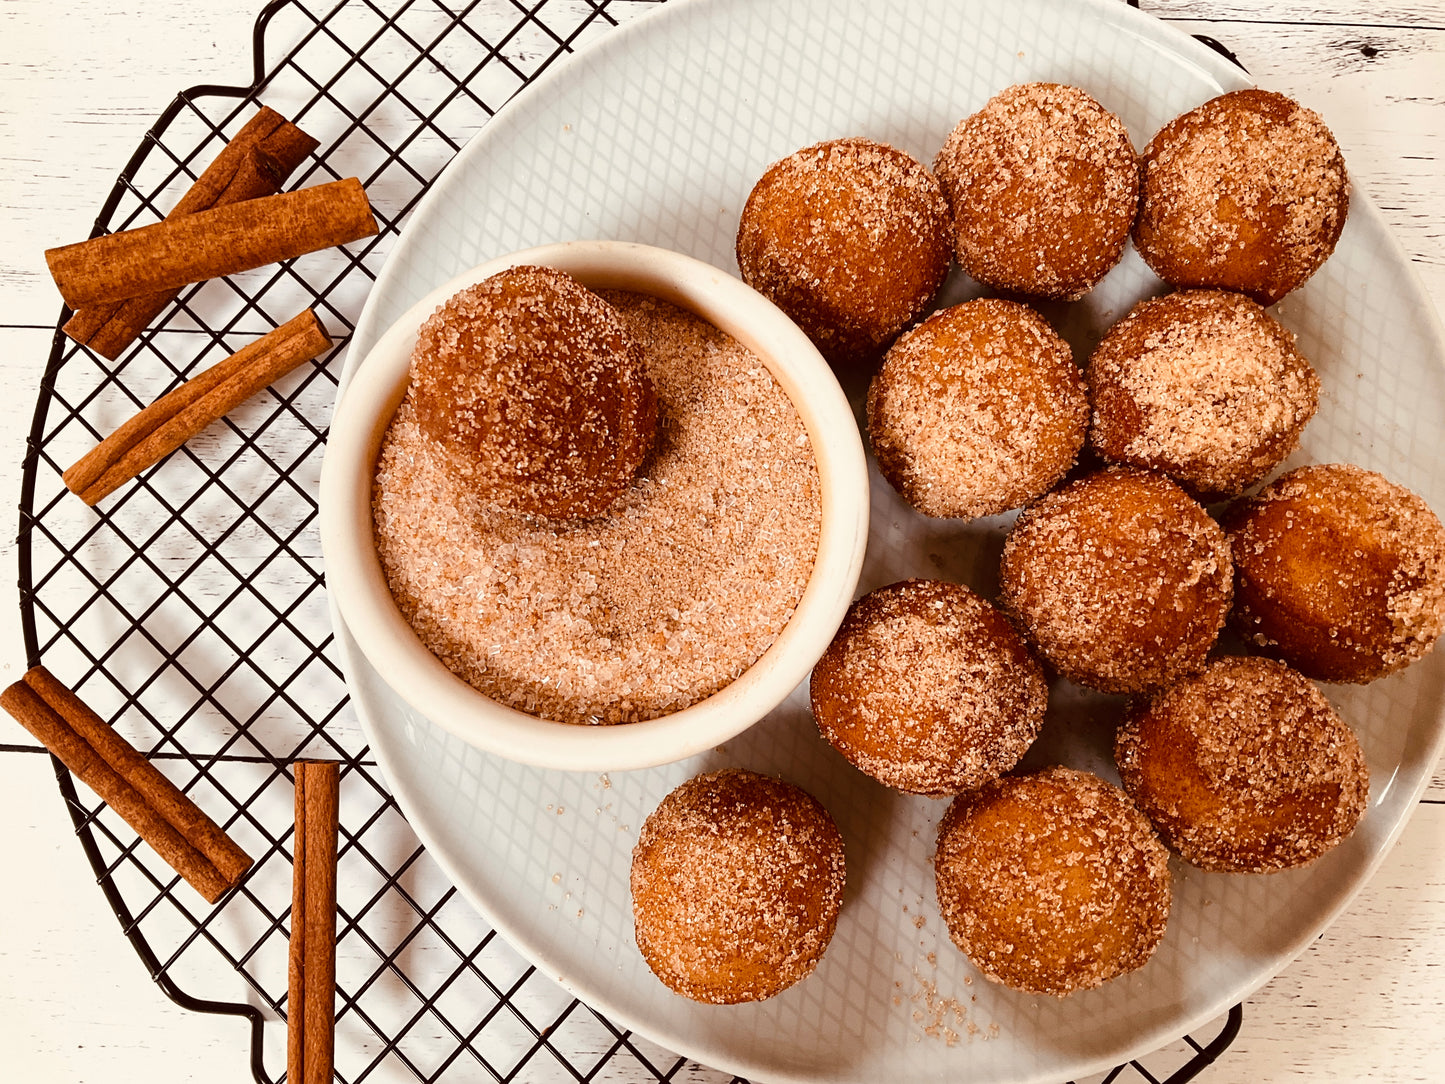 Cinnamon Sugar Donut Holes - 1/2 dozen